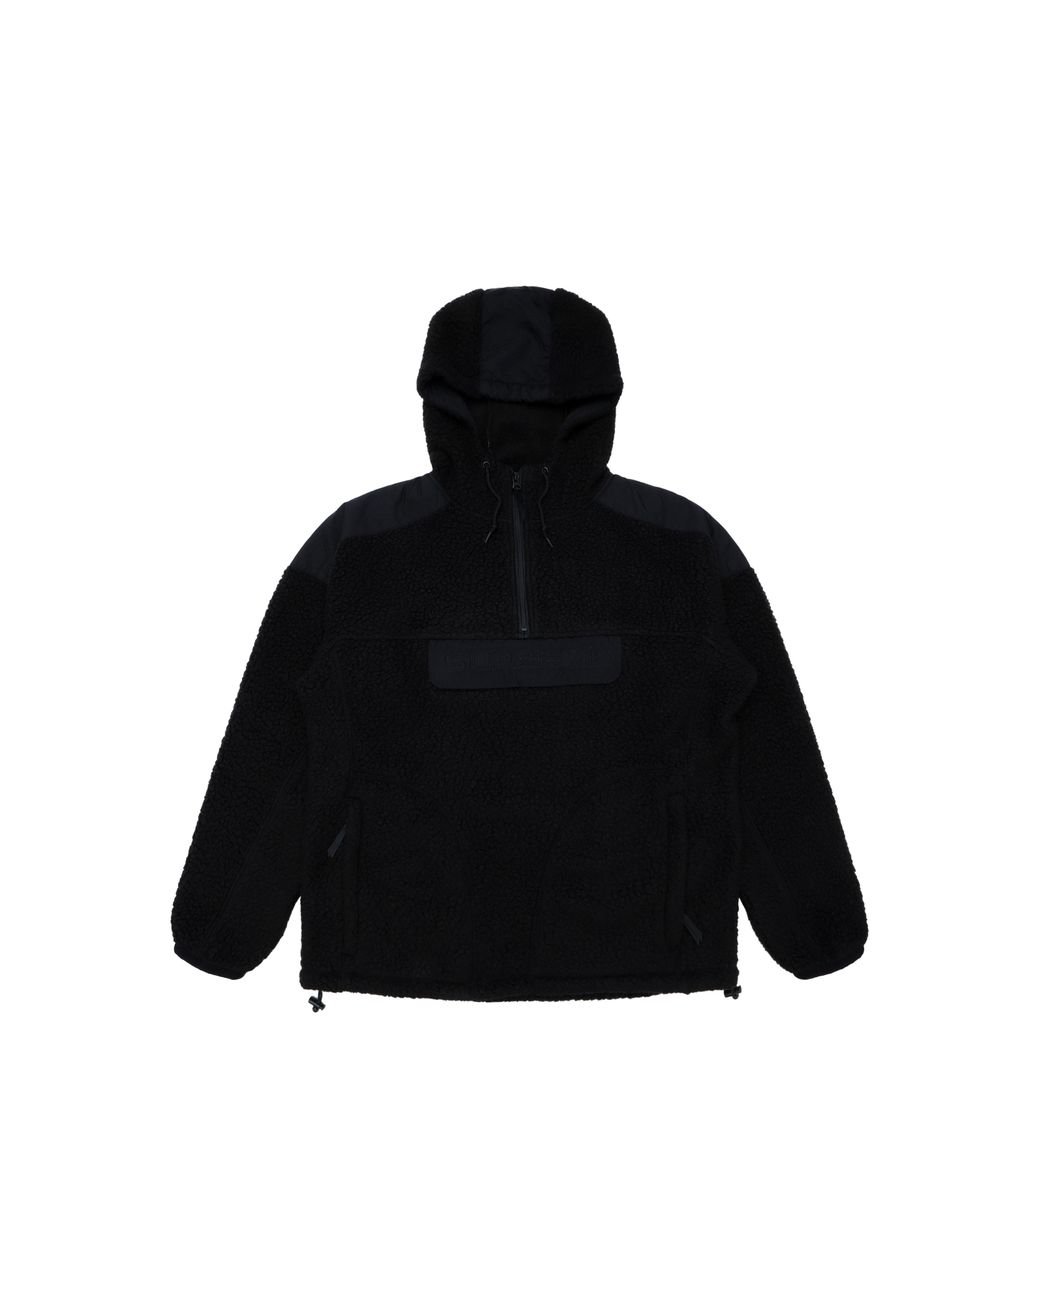 Supreme Polartec Hooded Half Zip Pullover in Black for Men - Lyst